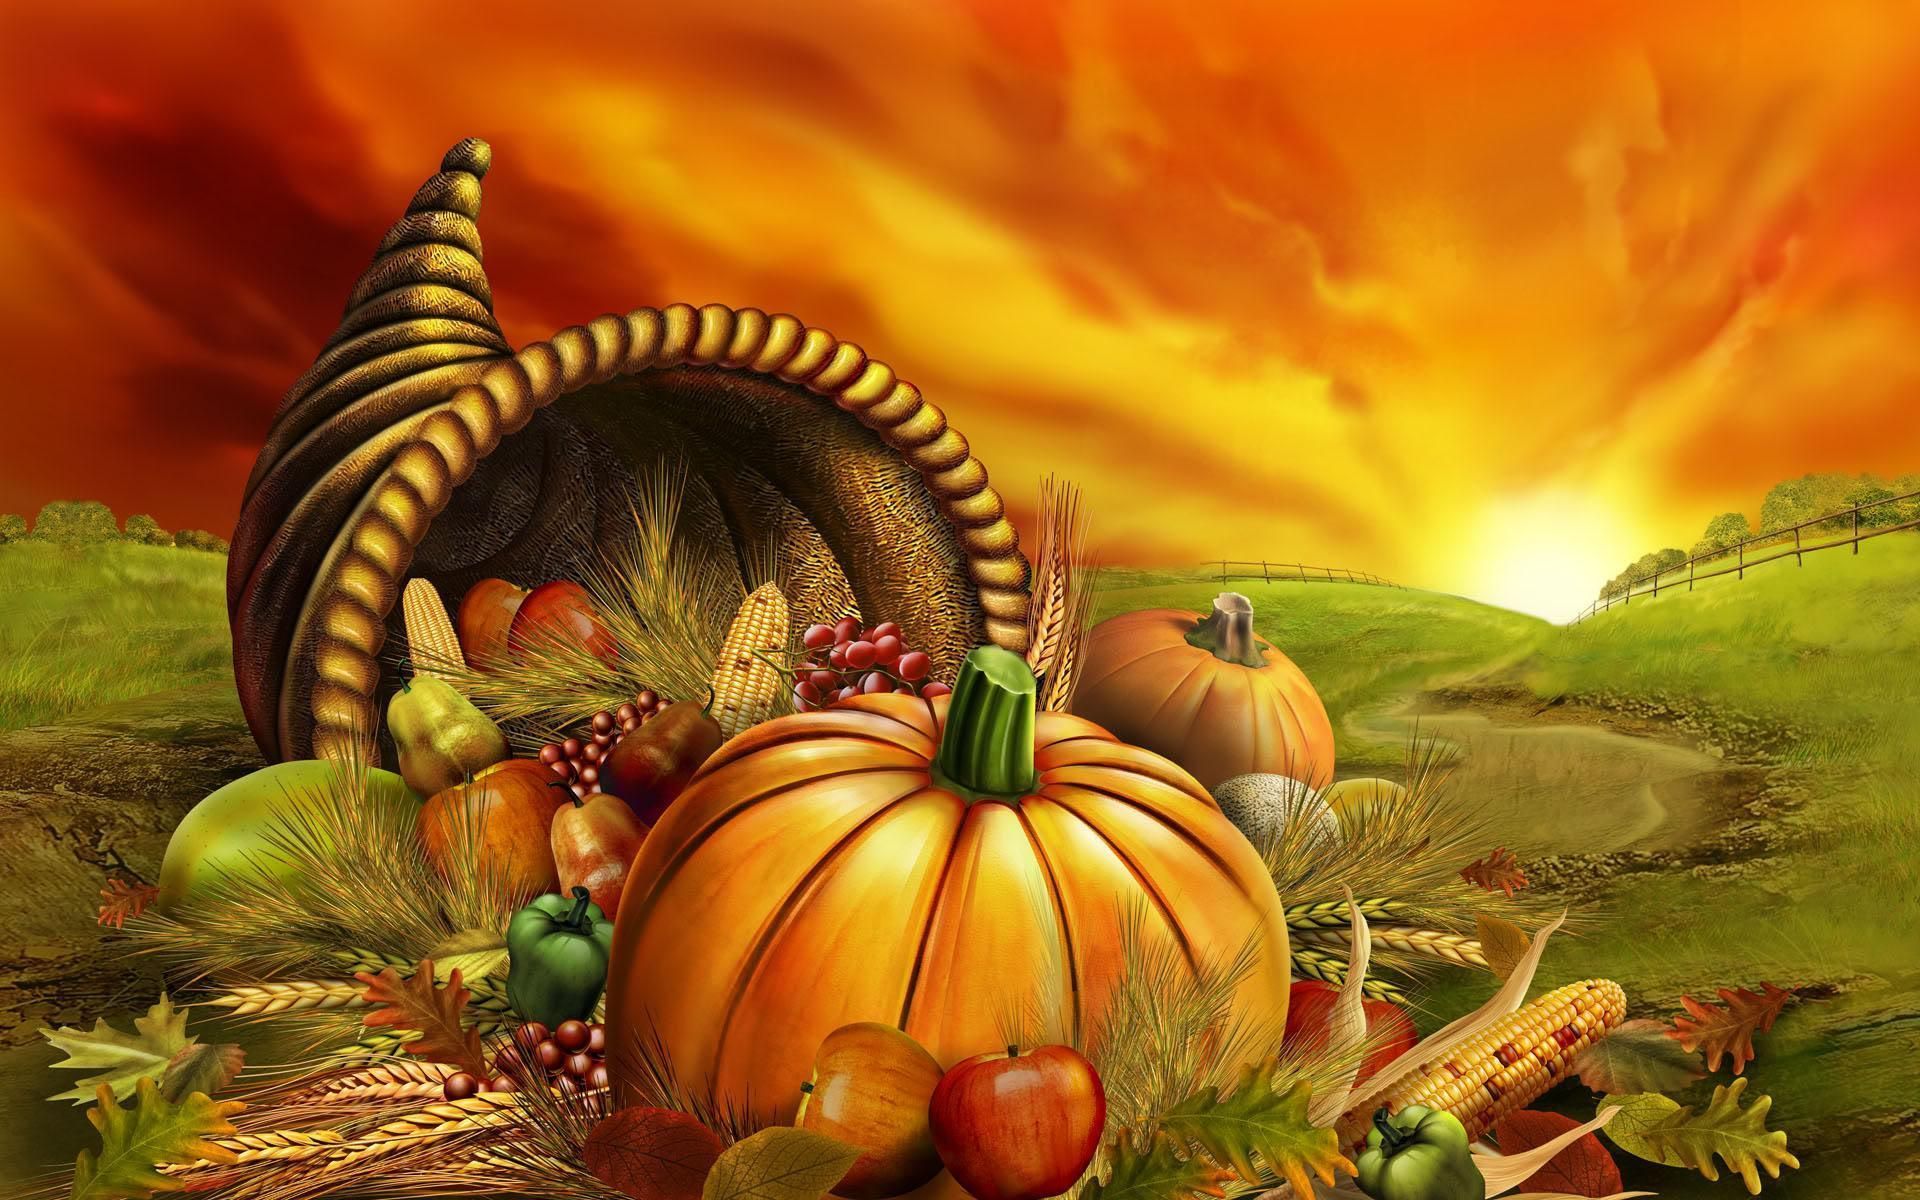 Free Thanksgiving Background Wallpaper For Desktop. Thanksgiving image, Thanksgiving picture, Thanksgiving wallpaper